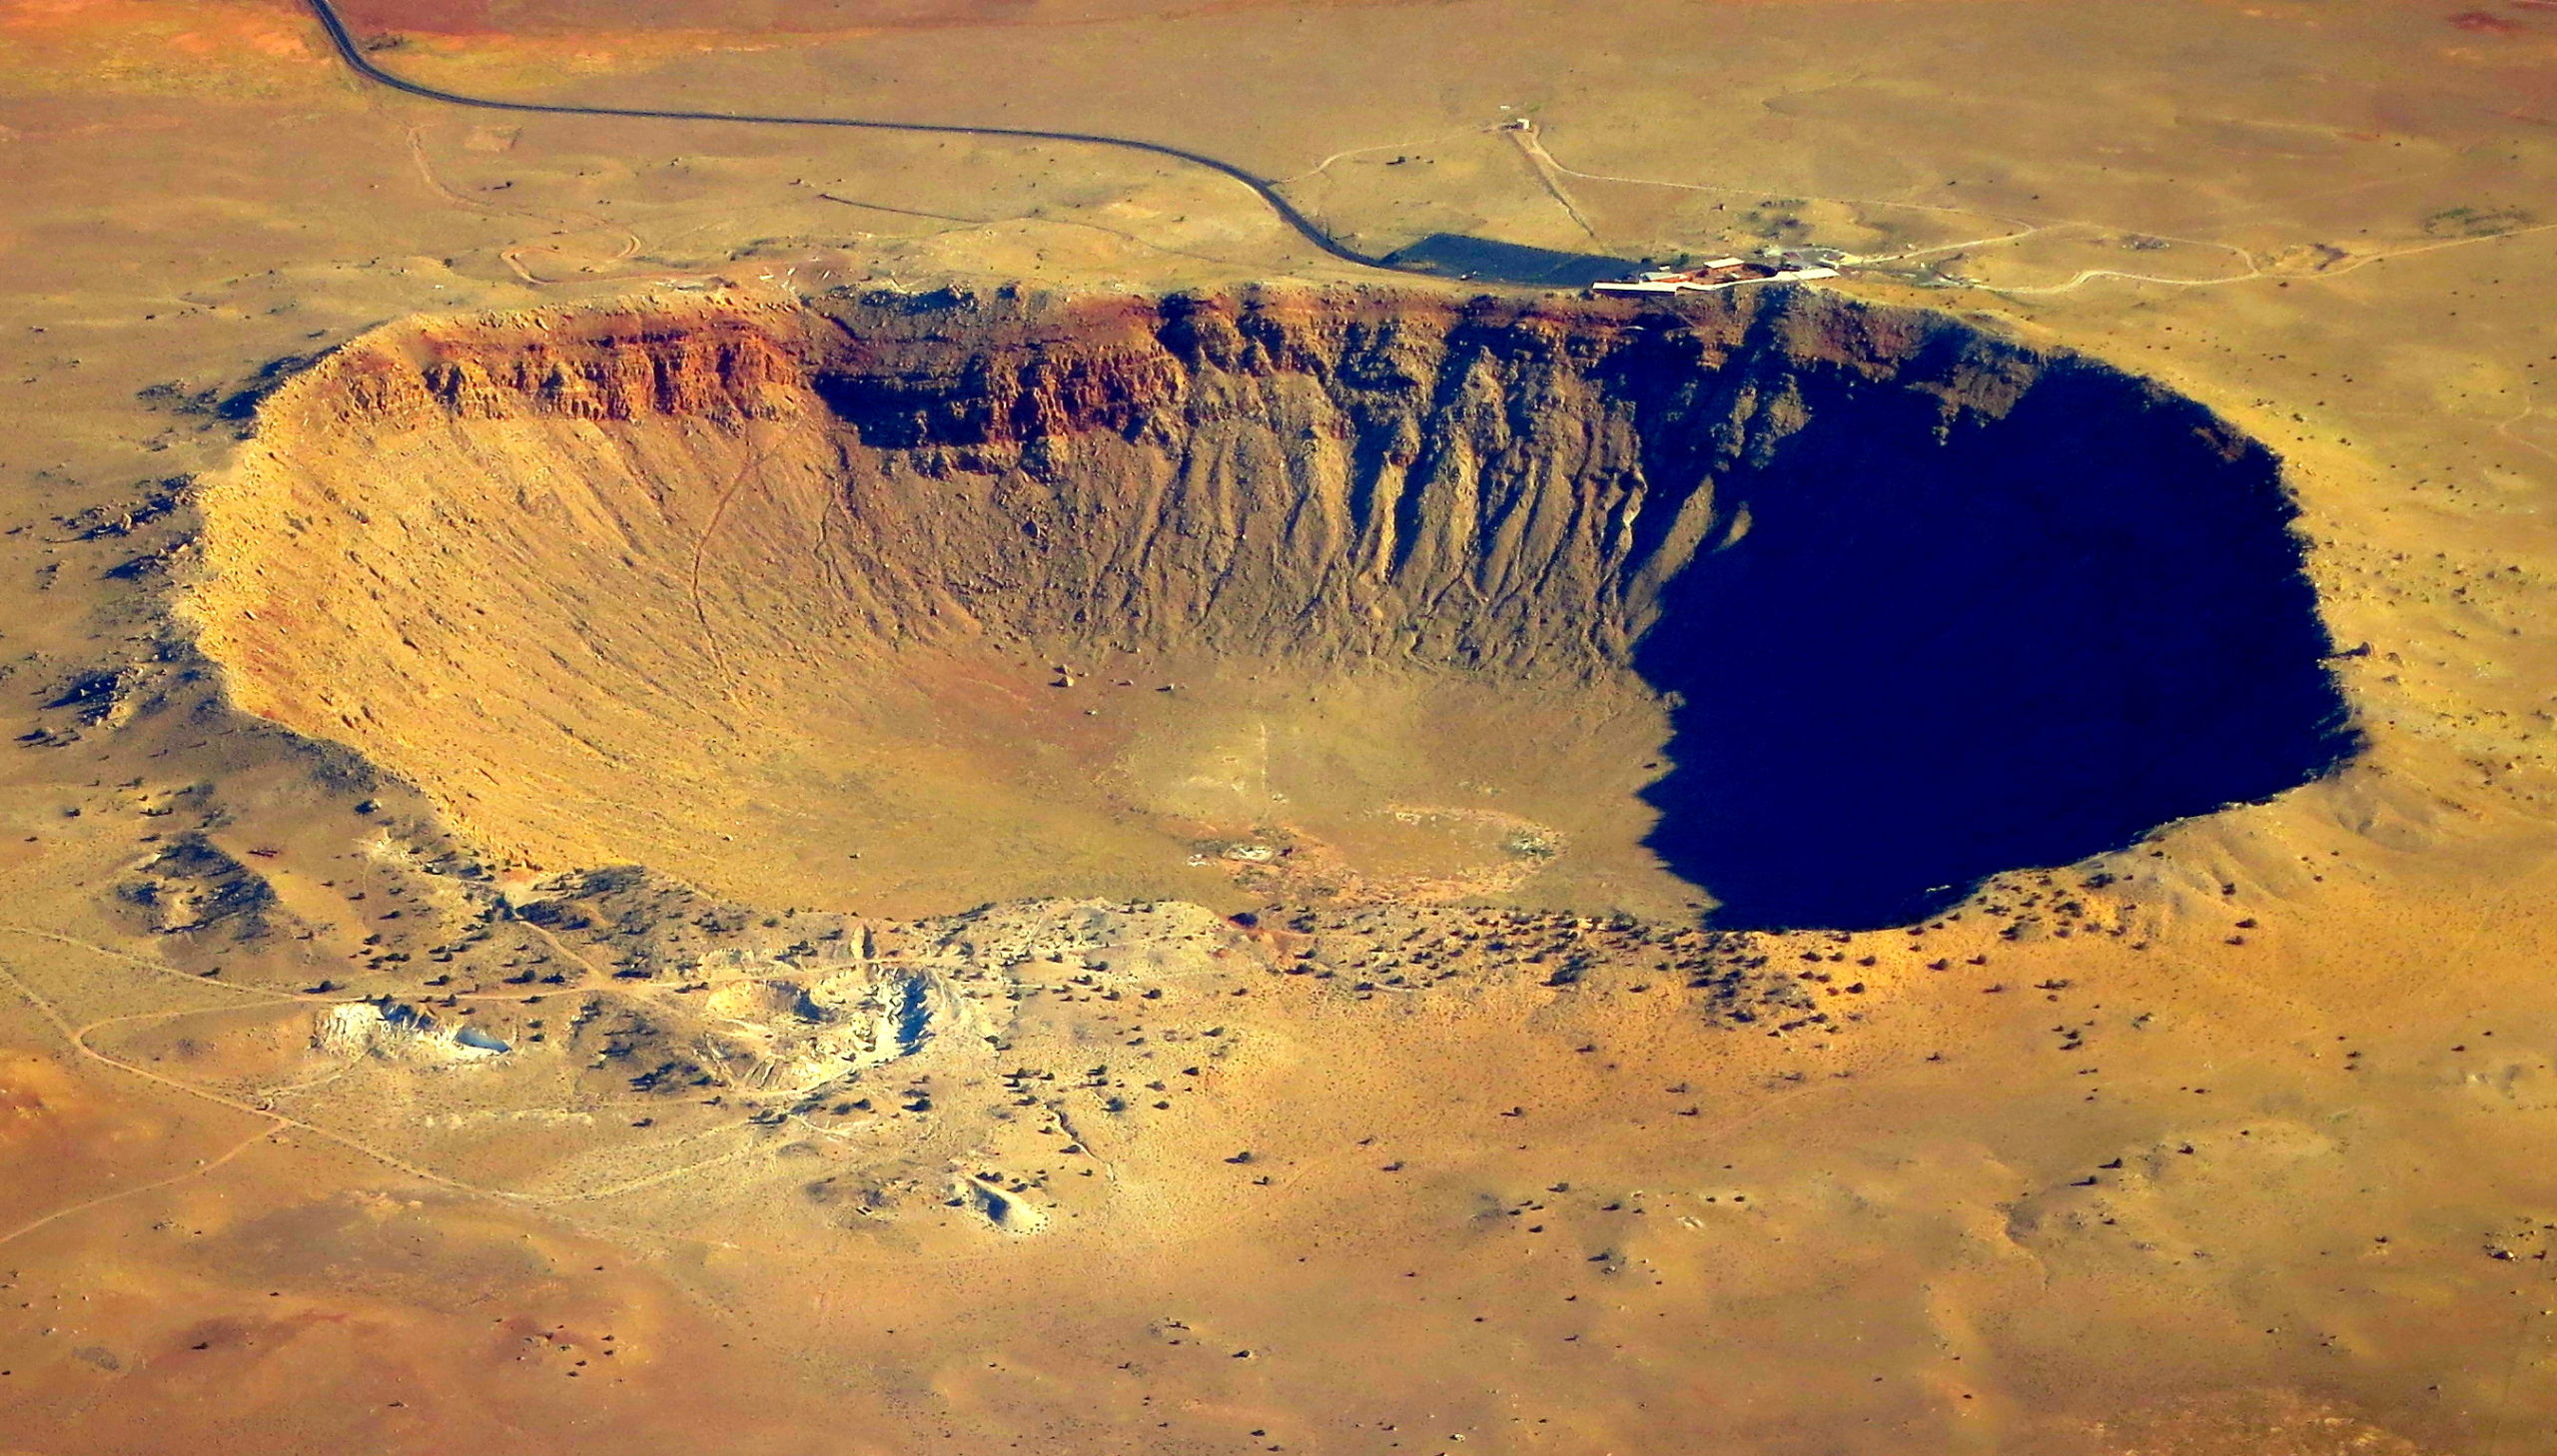 Meteor Crater (Credit: Steve Jurvetson from Menlo Park, USA LINK: https://www.flickr.com/people/44124348109@N01)